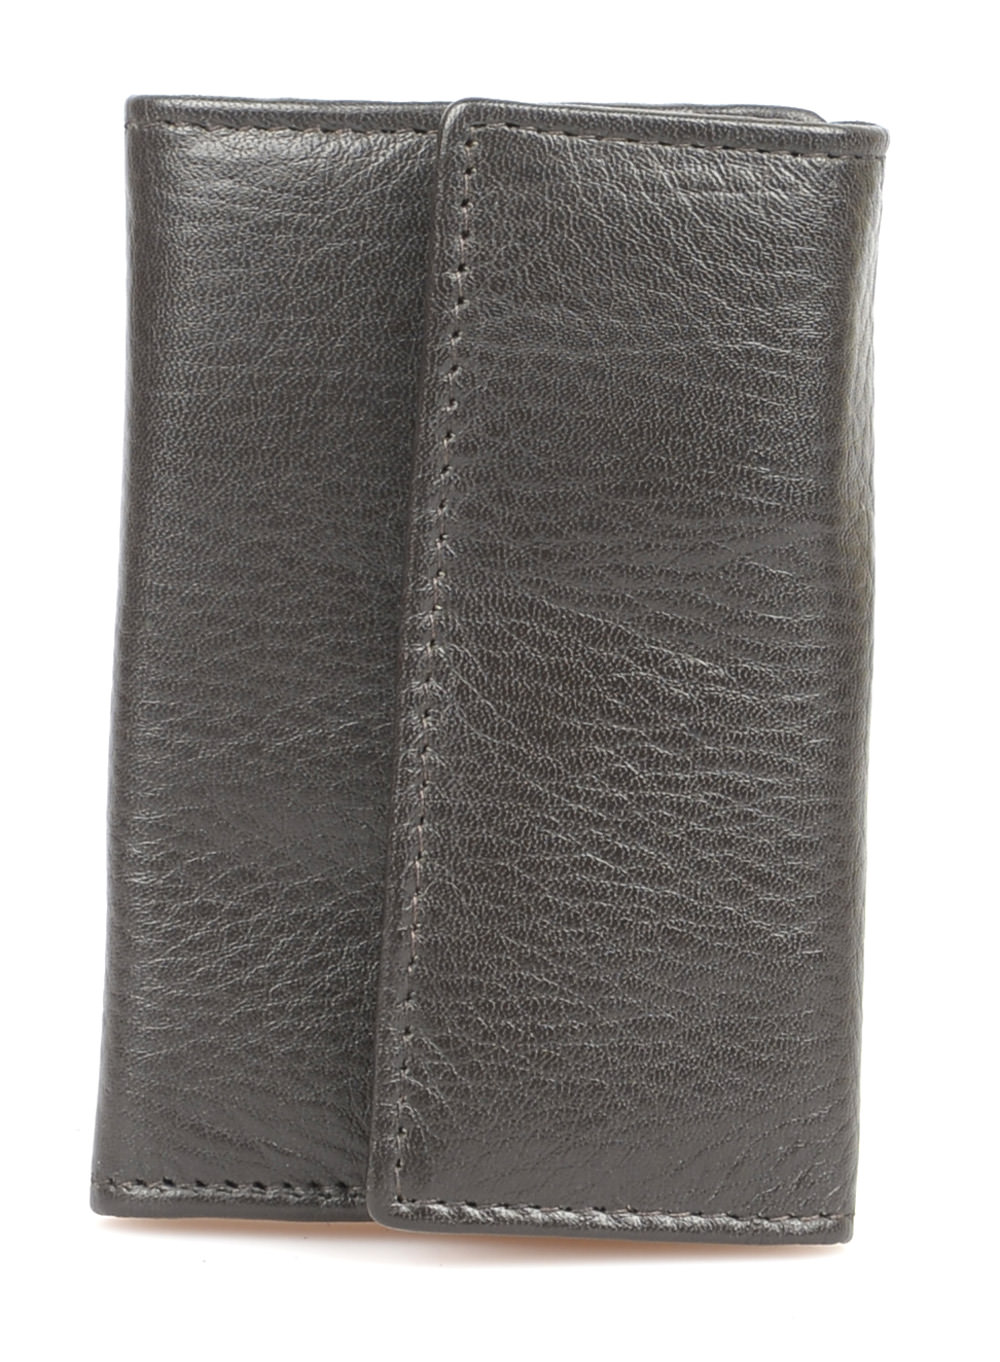 8 Hook Key case - Golunski Leather Goods